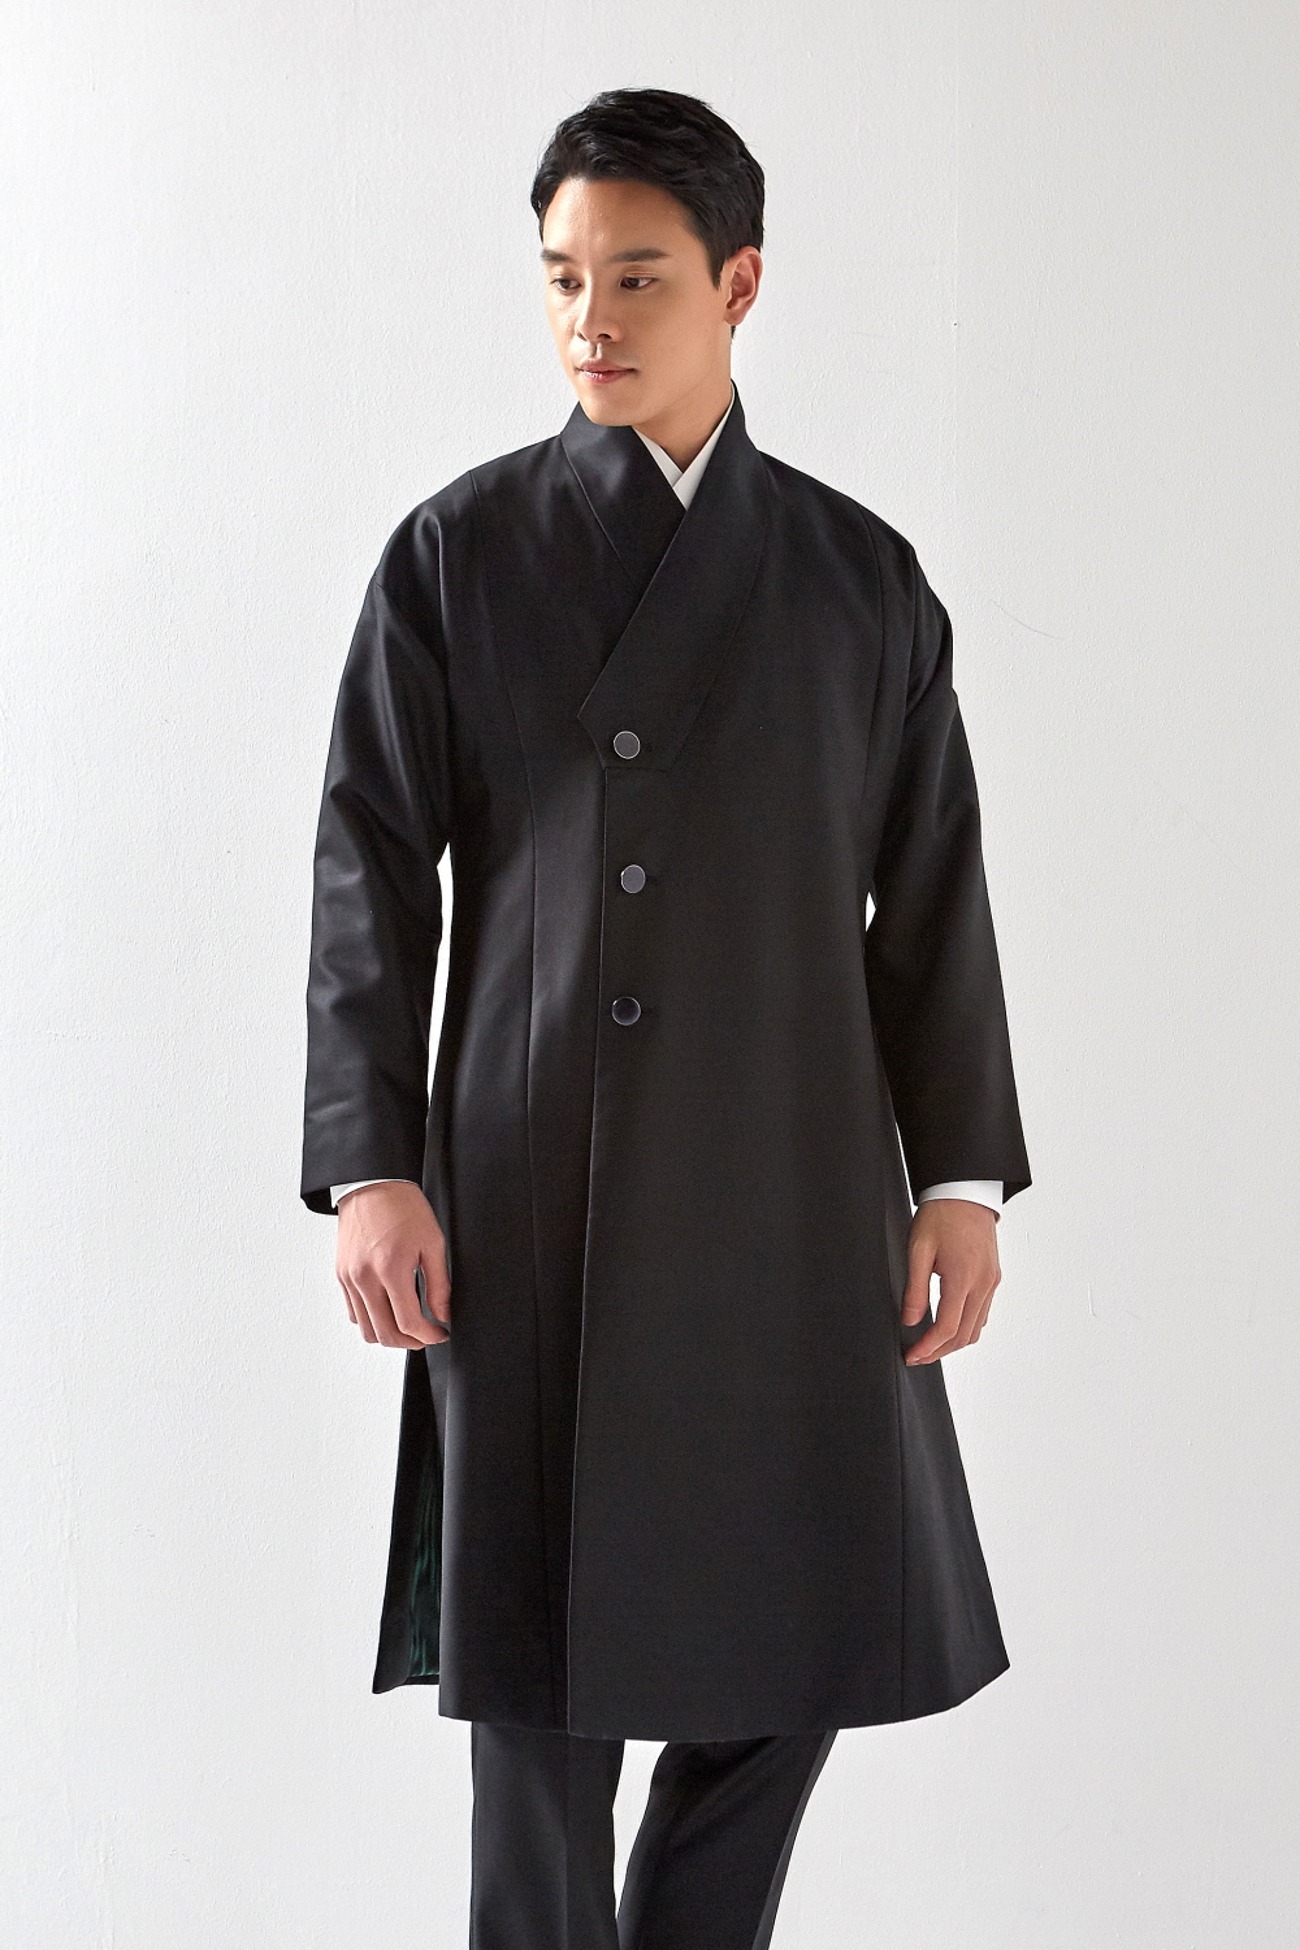 [Customized, conductor&#039;s uniform] A-line coat. - Black.